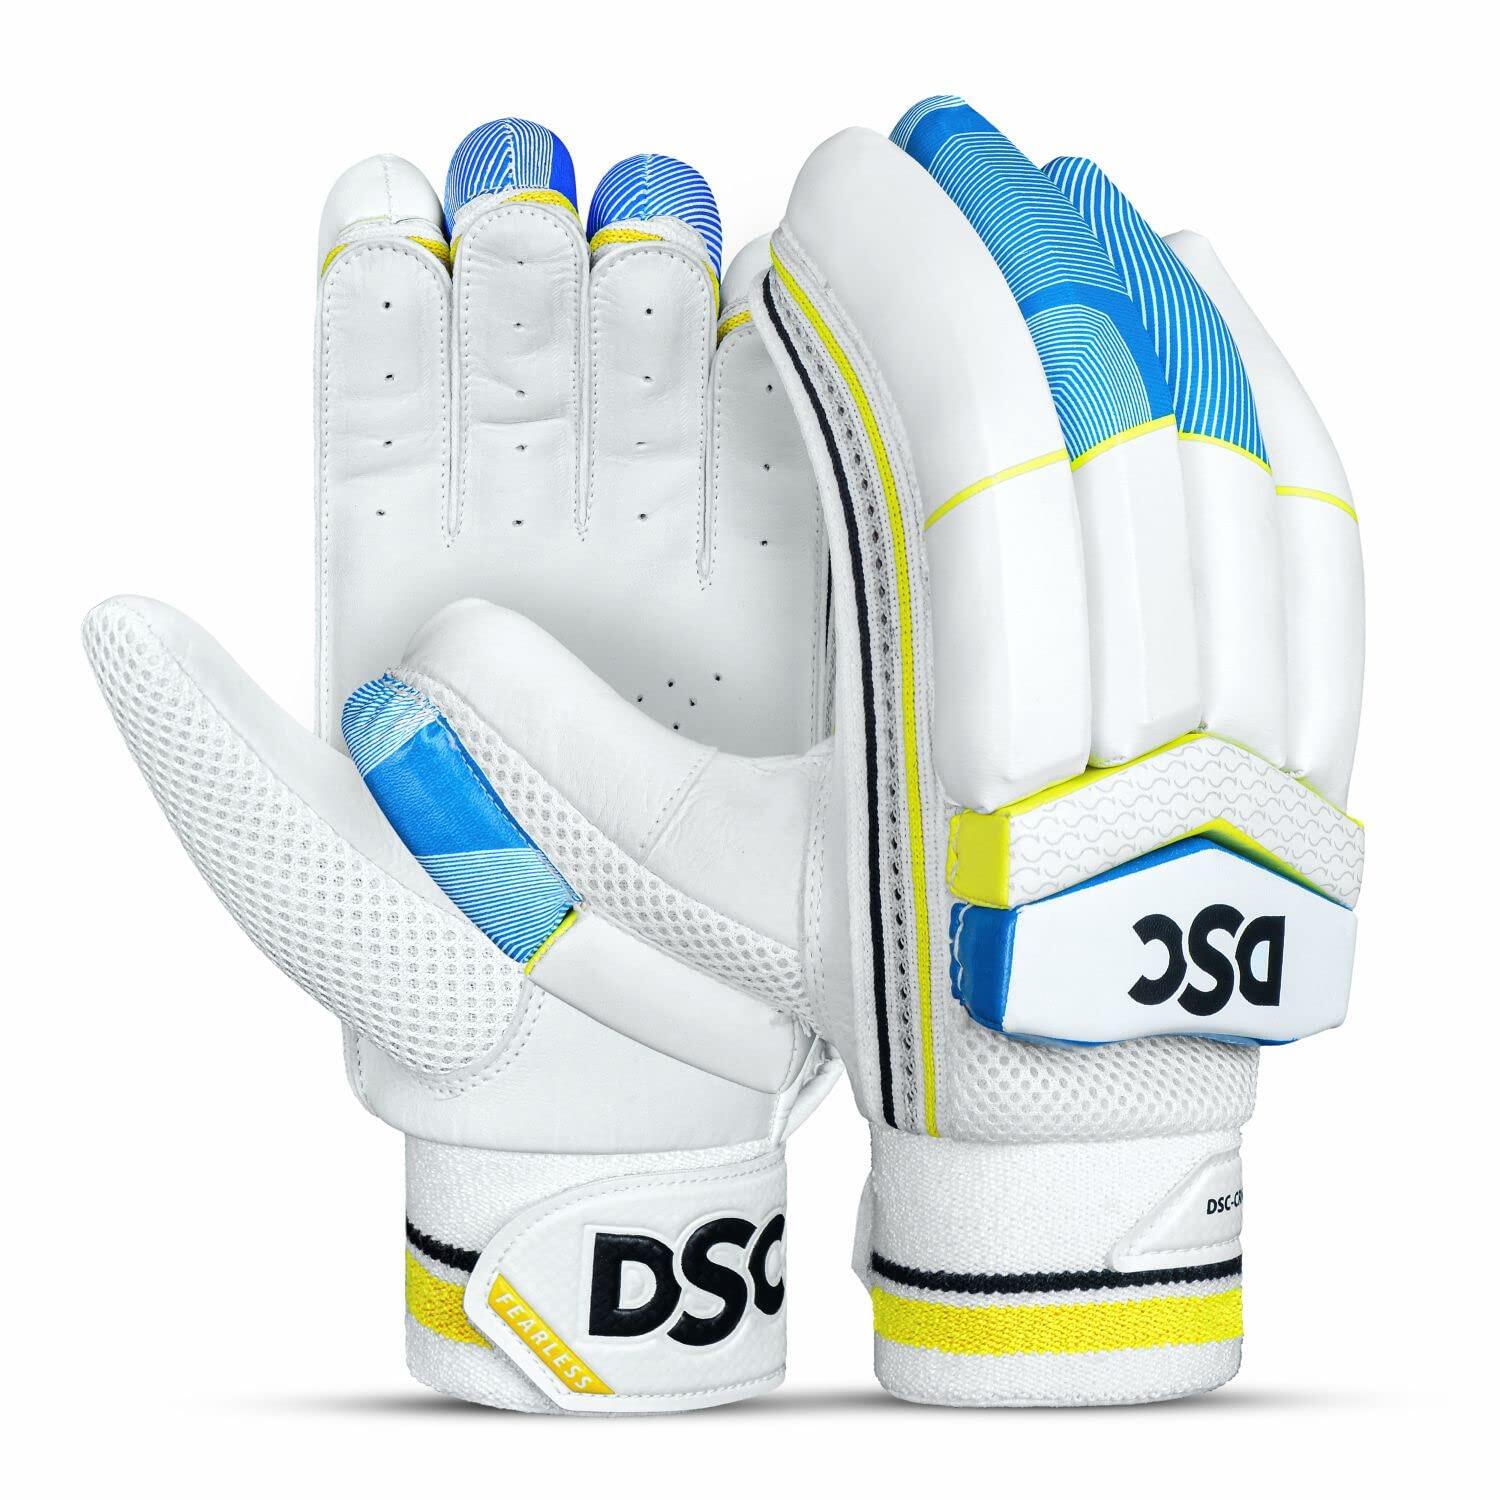 DSC Condor Motion Leather Cricket Batting Gloves 1/5